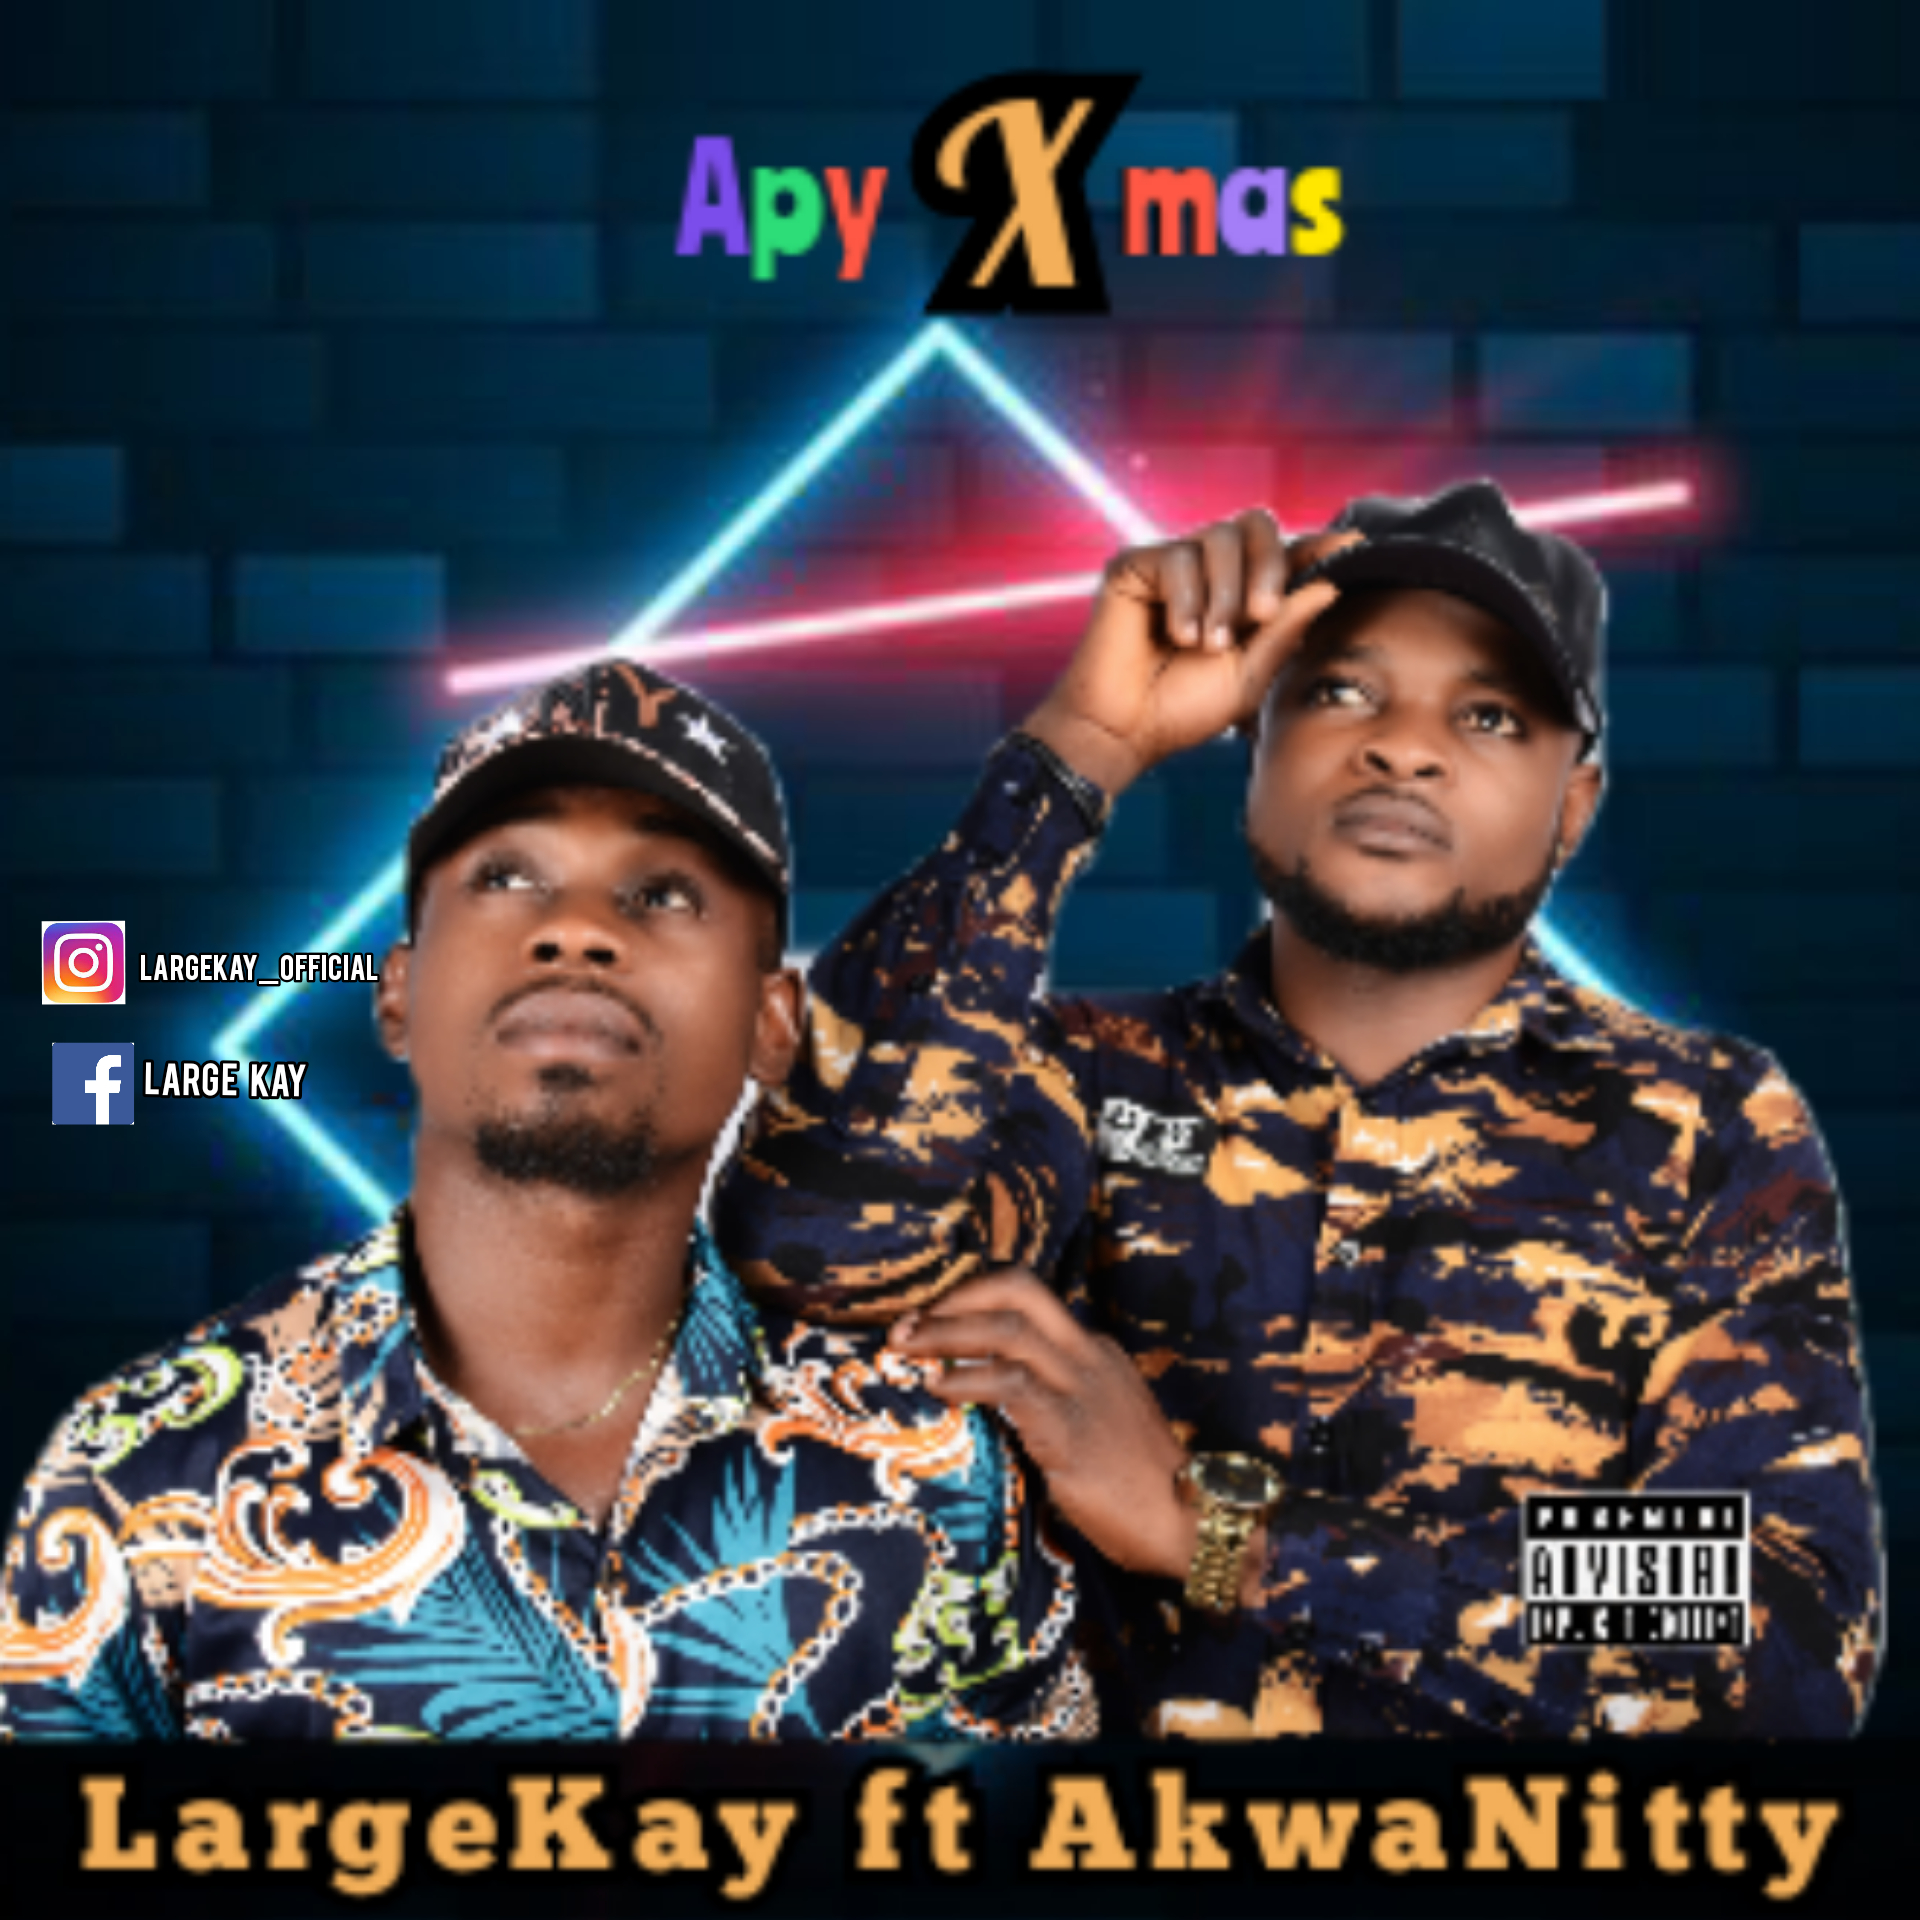 DOWNLOAD MUSIC: LargeKay ft AkwaNitty – ApyXmas